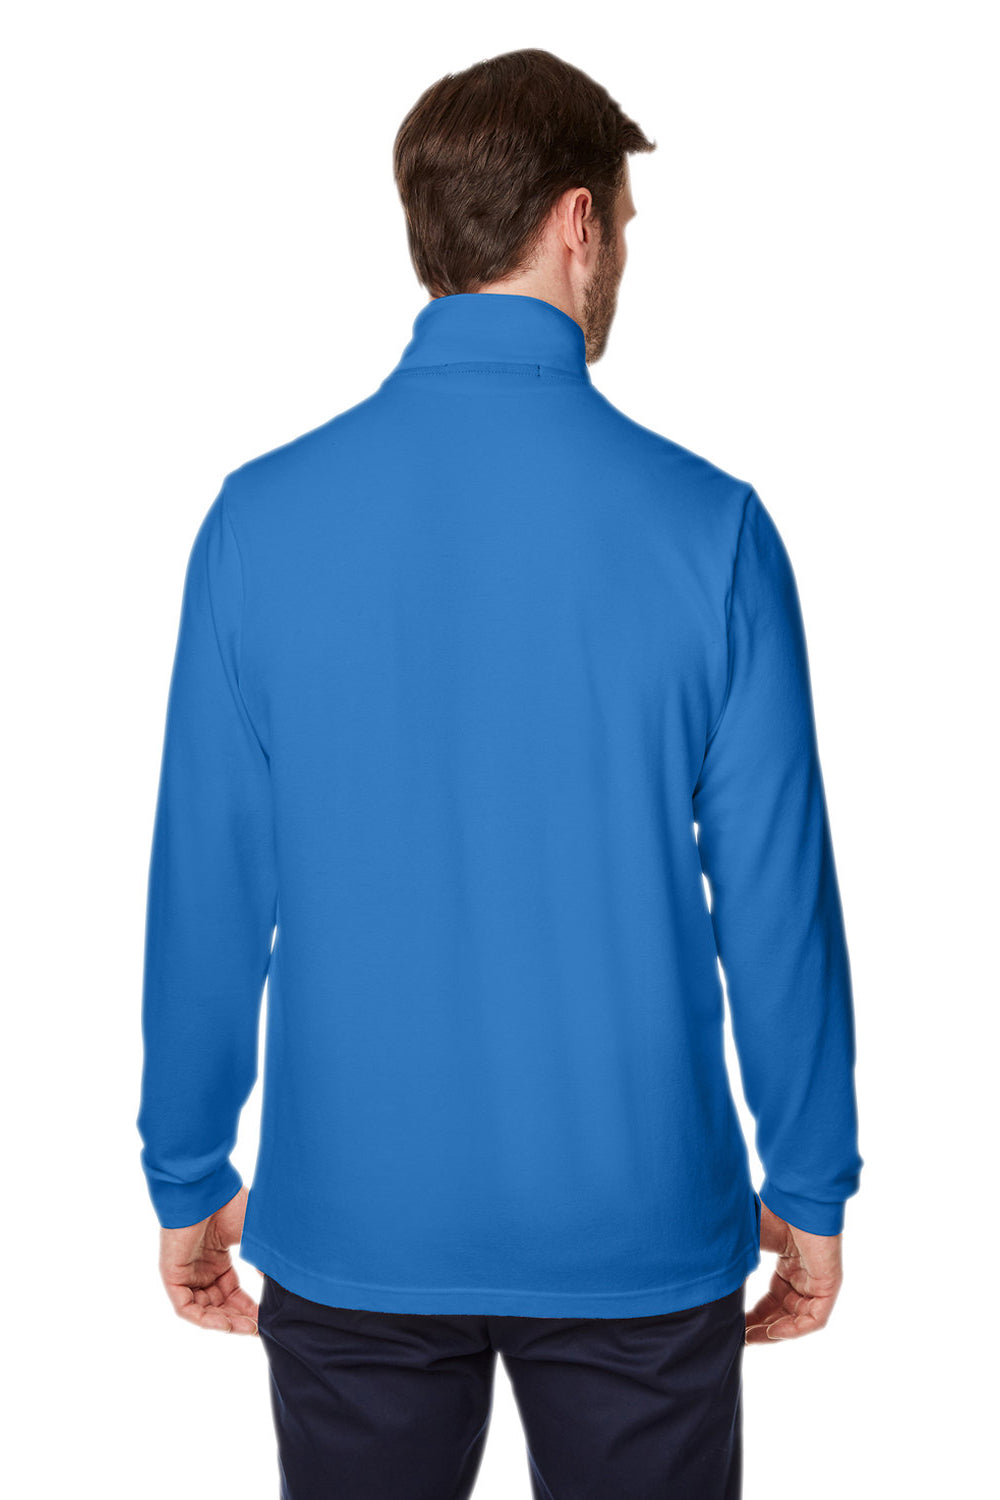 Devon & Jones DG400 Mens New Classics Performance Moisture Wicking 1/4 Zip Sweatshirt French Blue Back